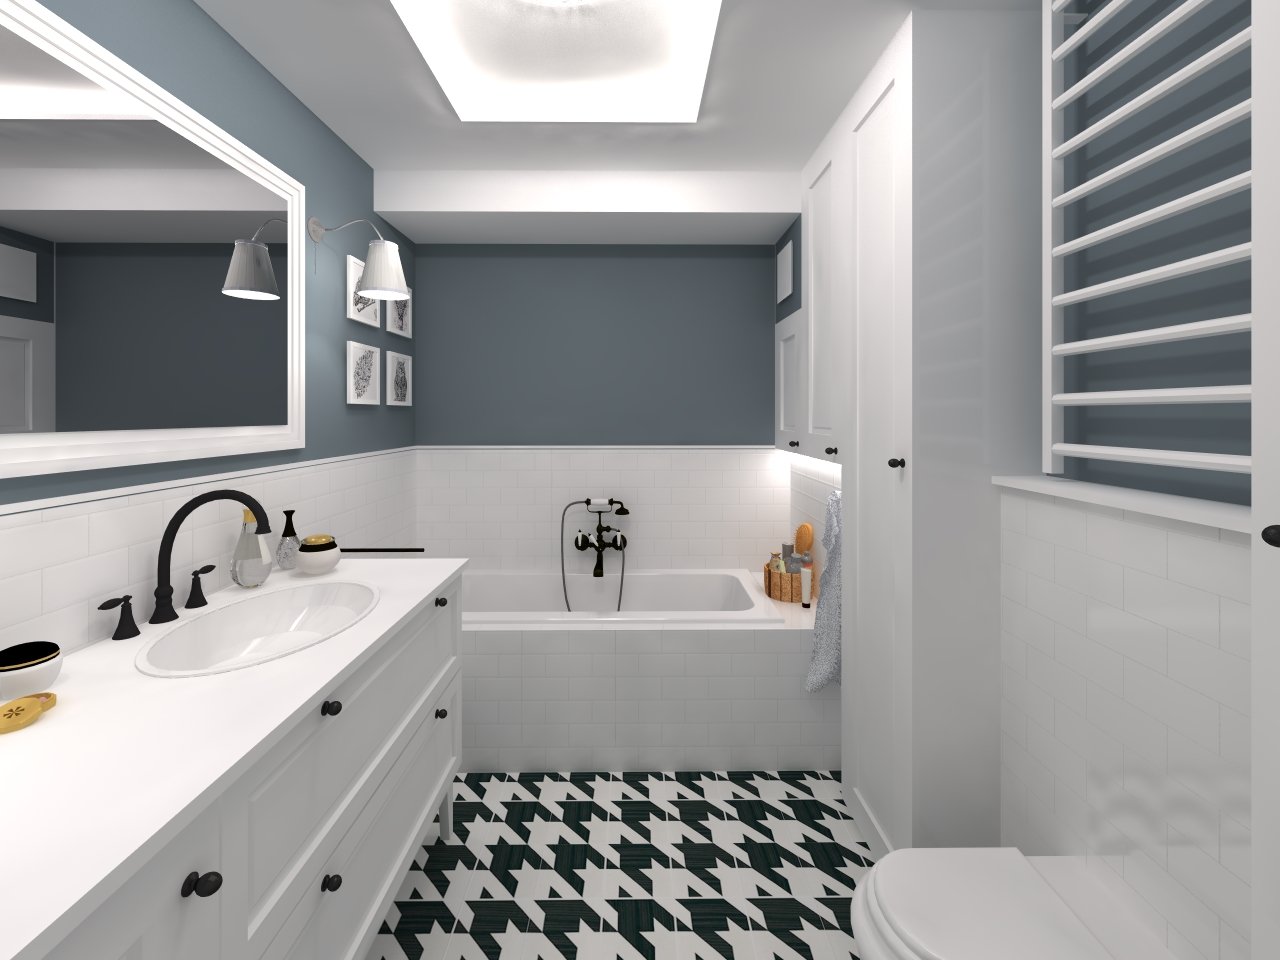 Продолговая ванная комната дизайн